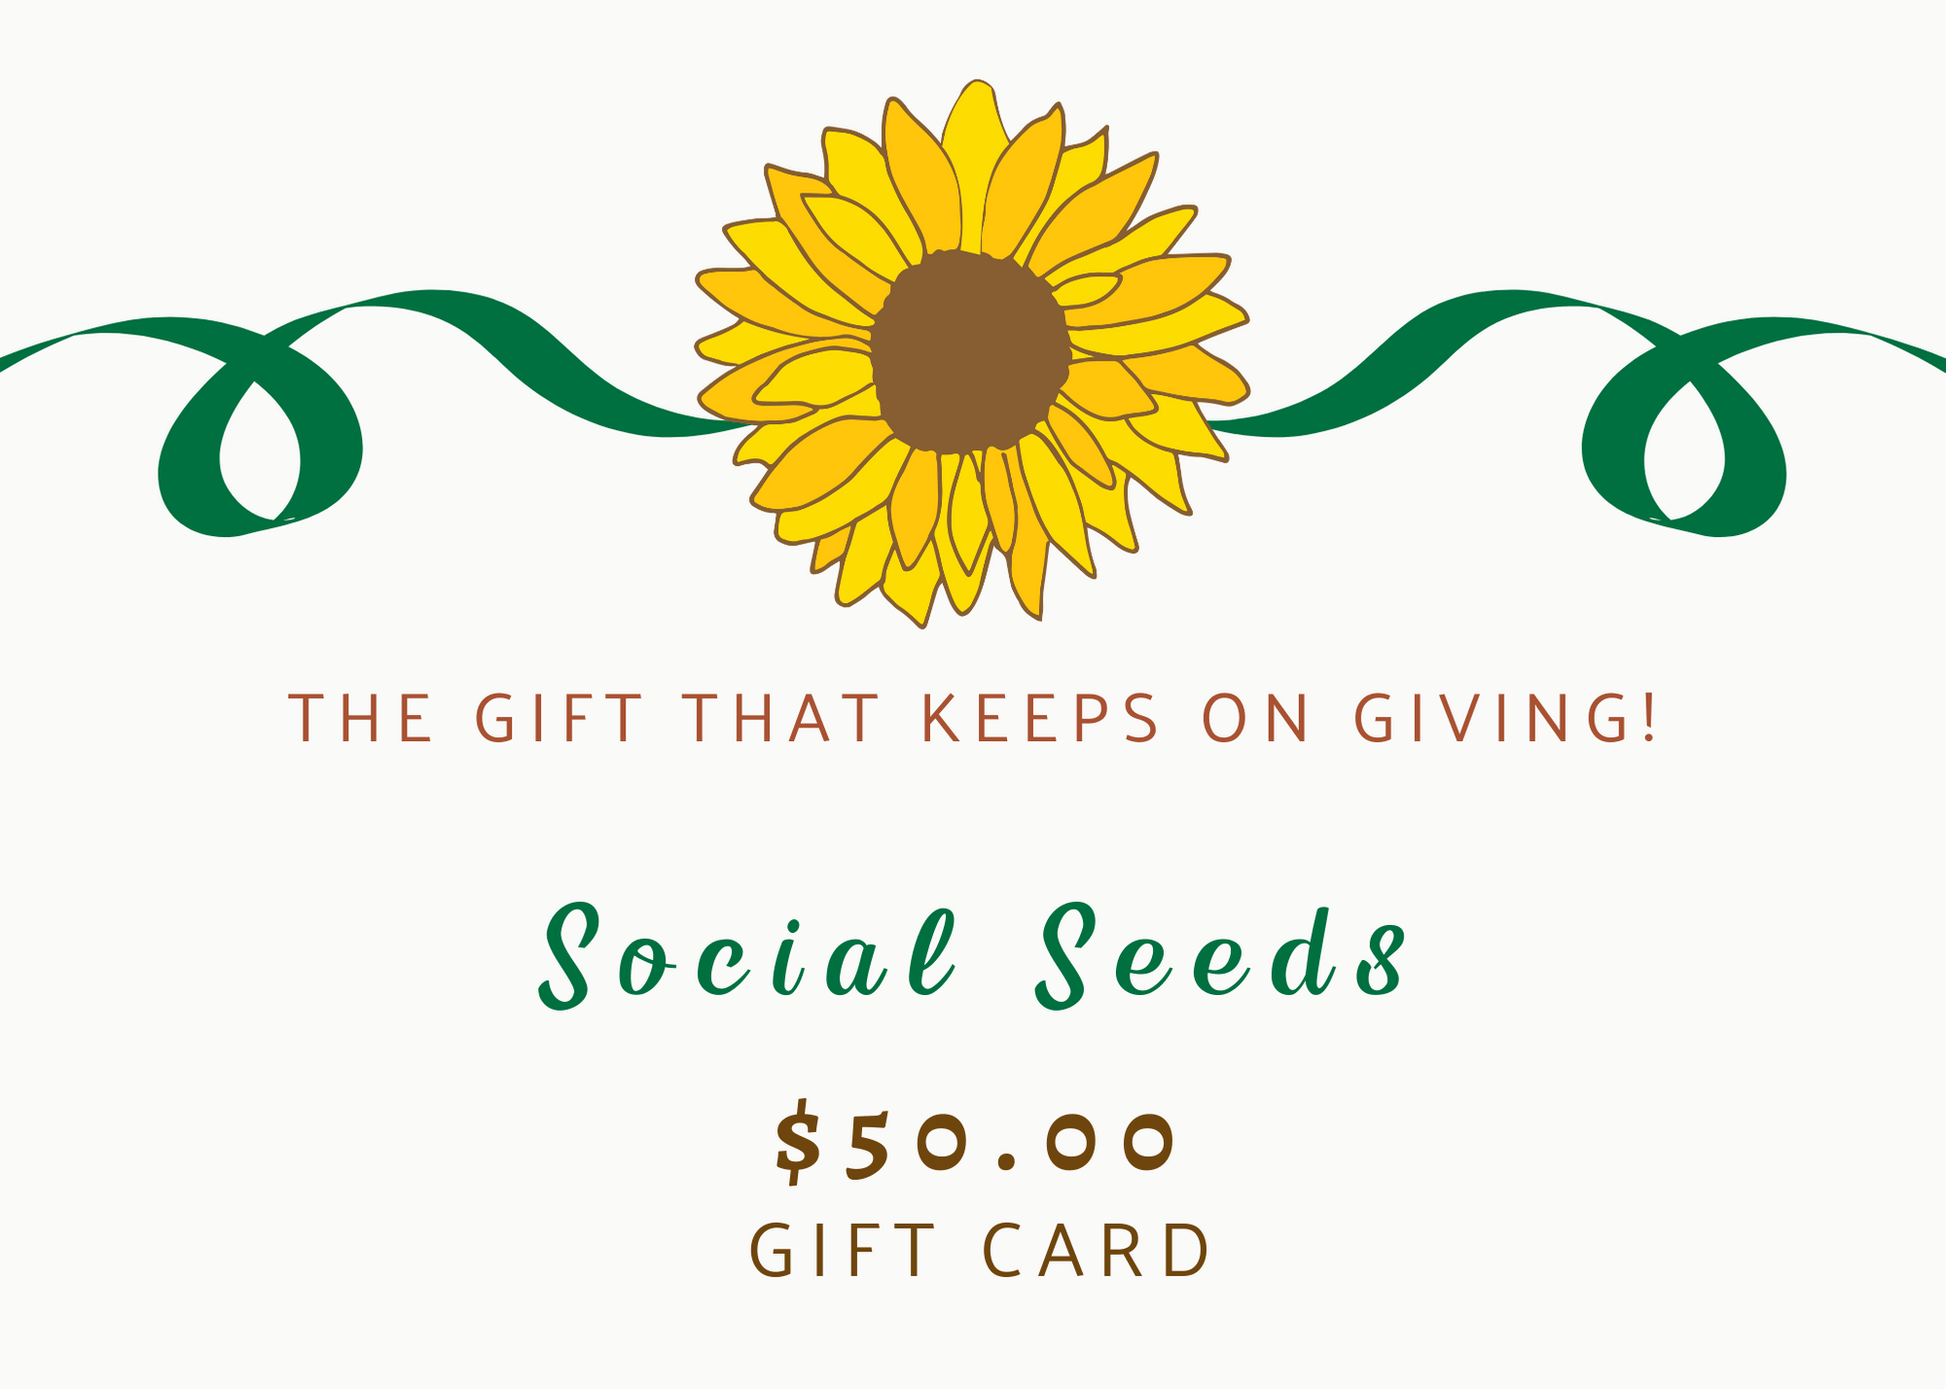 Social Seeds - Gift Cards - Social Seeds